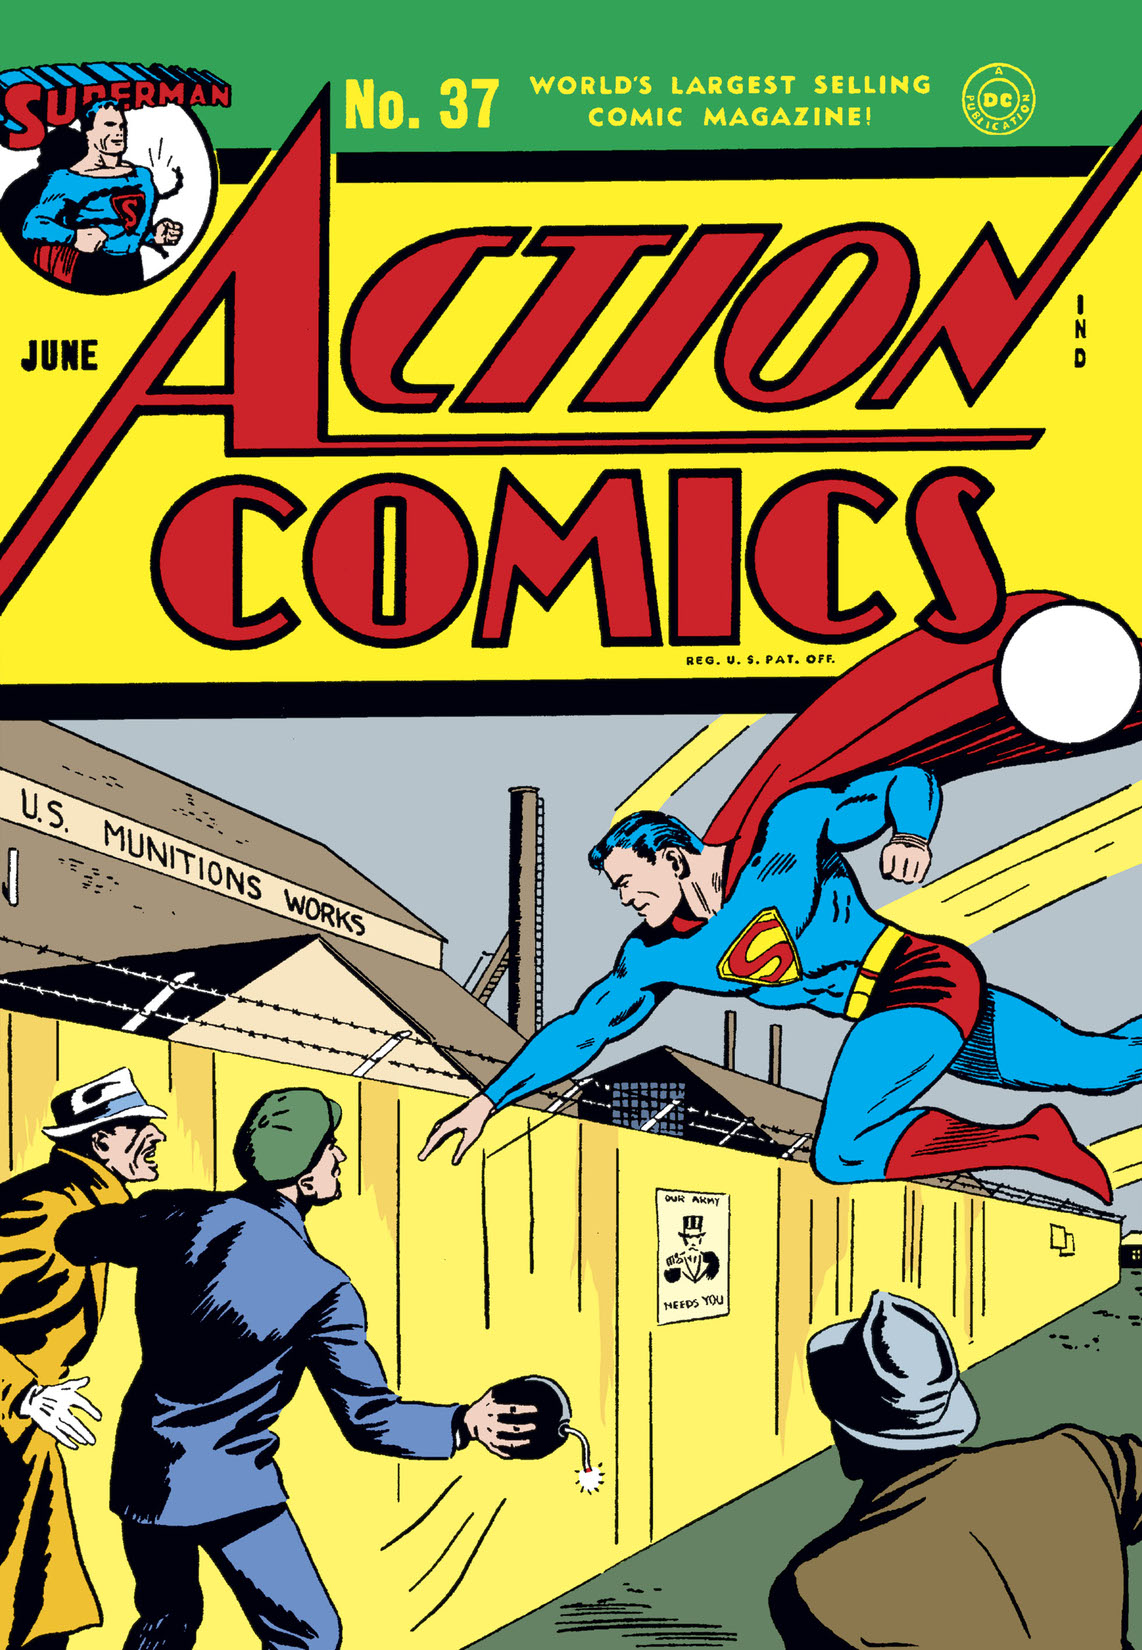 Action Comics (1938-) #37 preview images